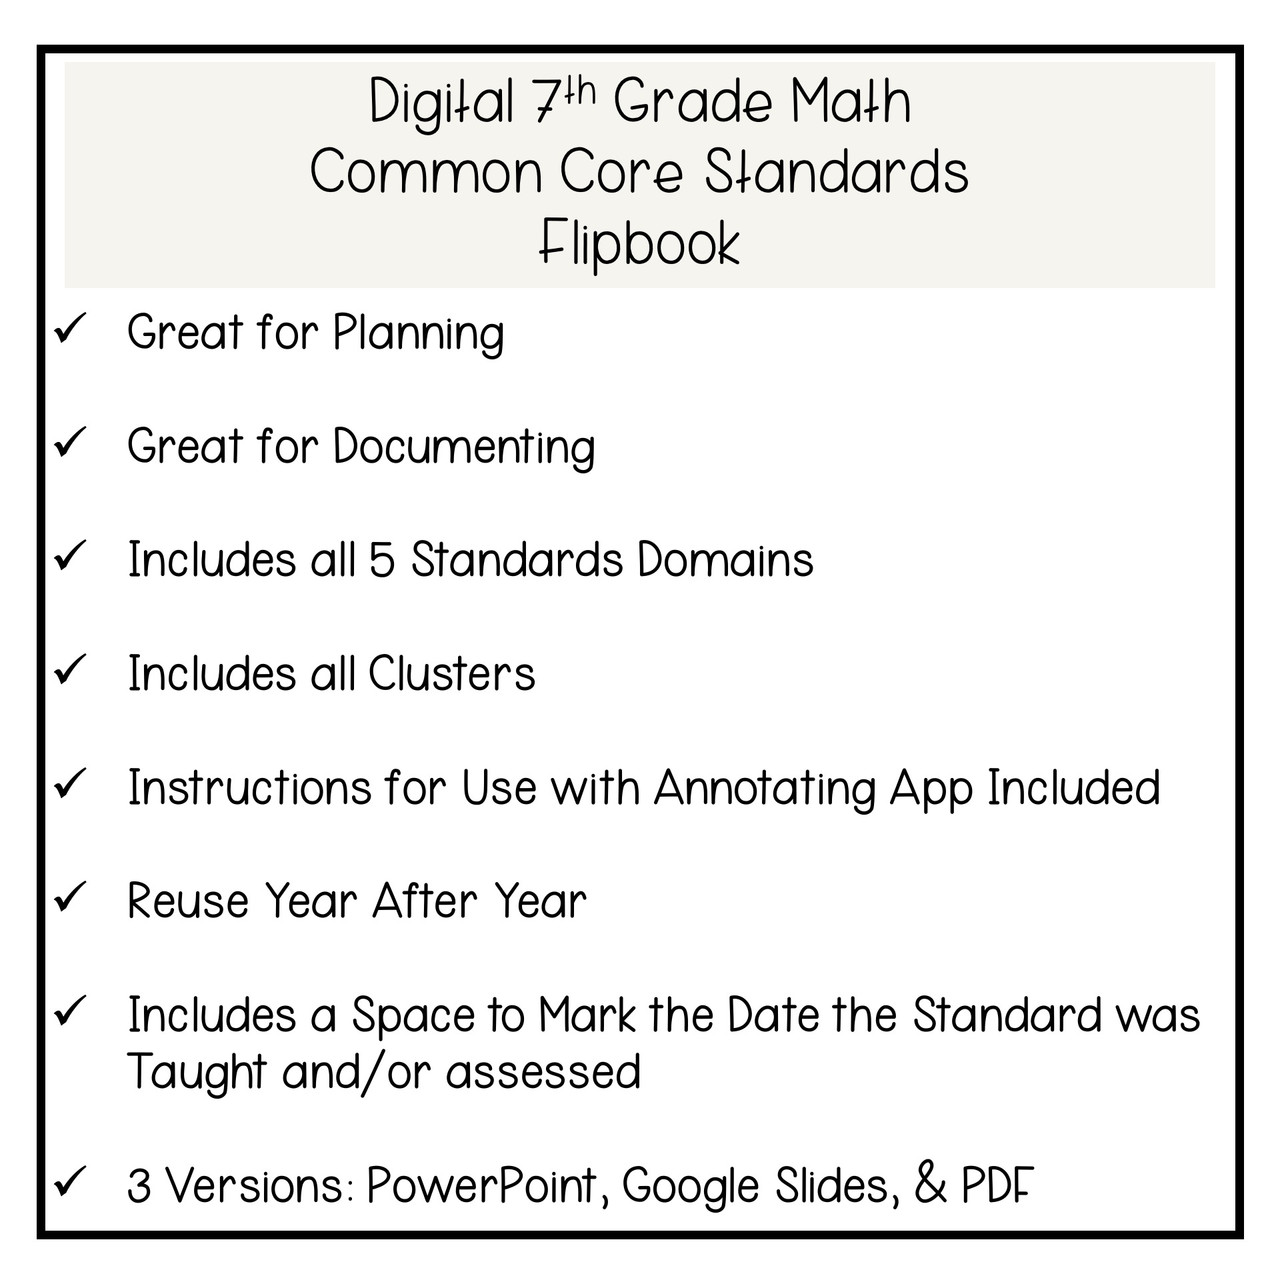 Digital 7th Grade Math Common Core State Standards Checklist Flipbook - Boho Rainbow Version